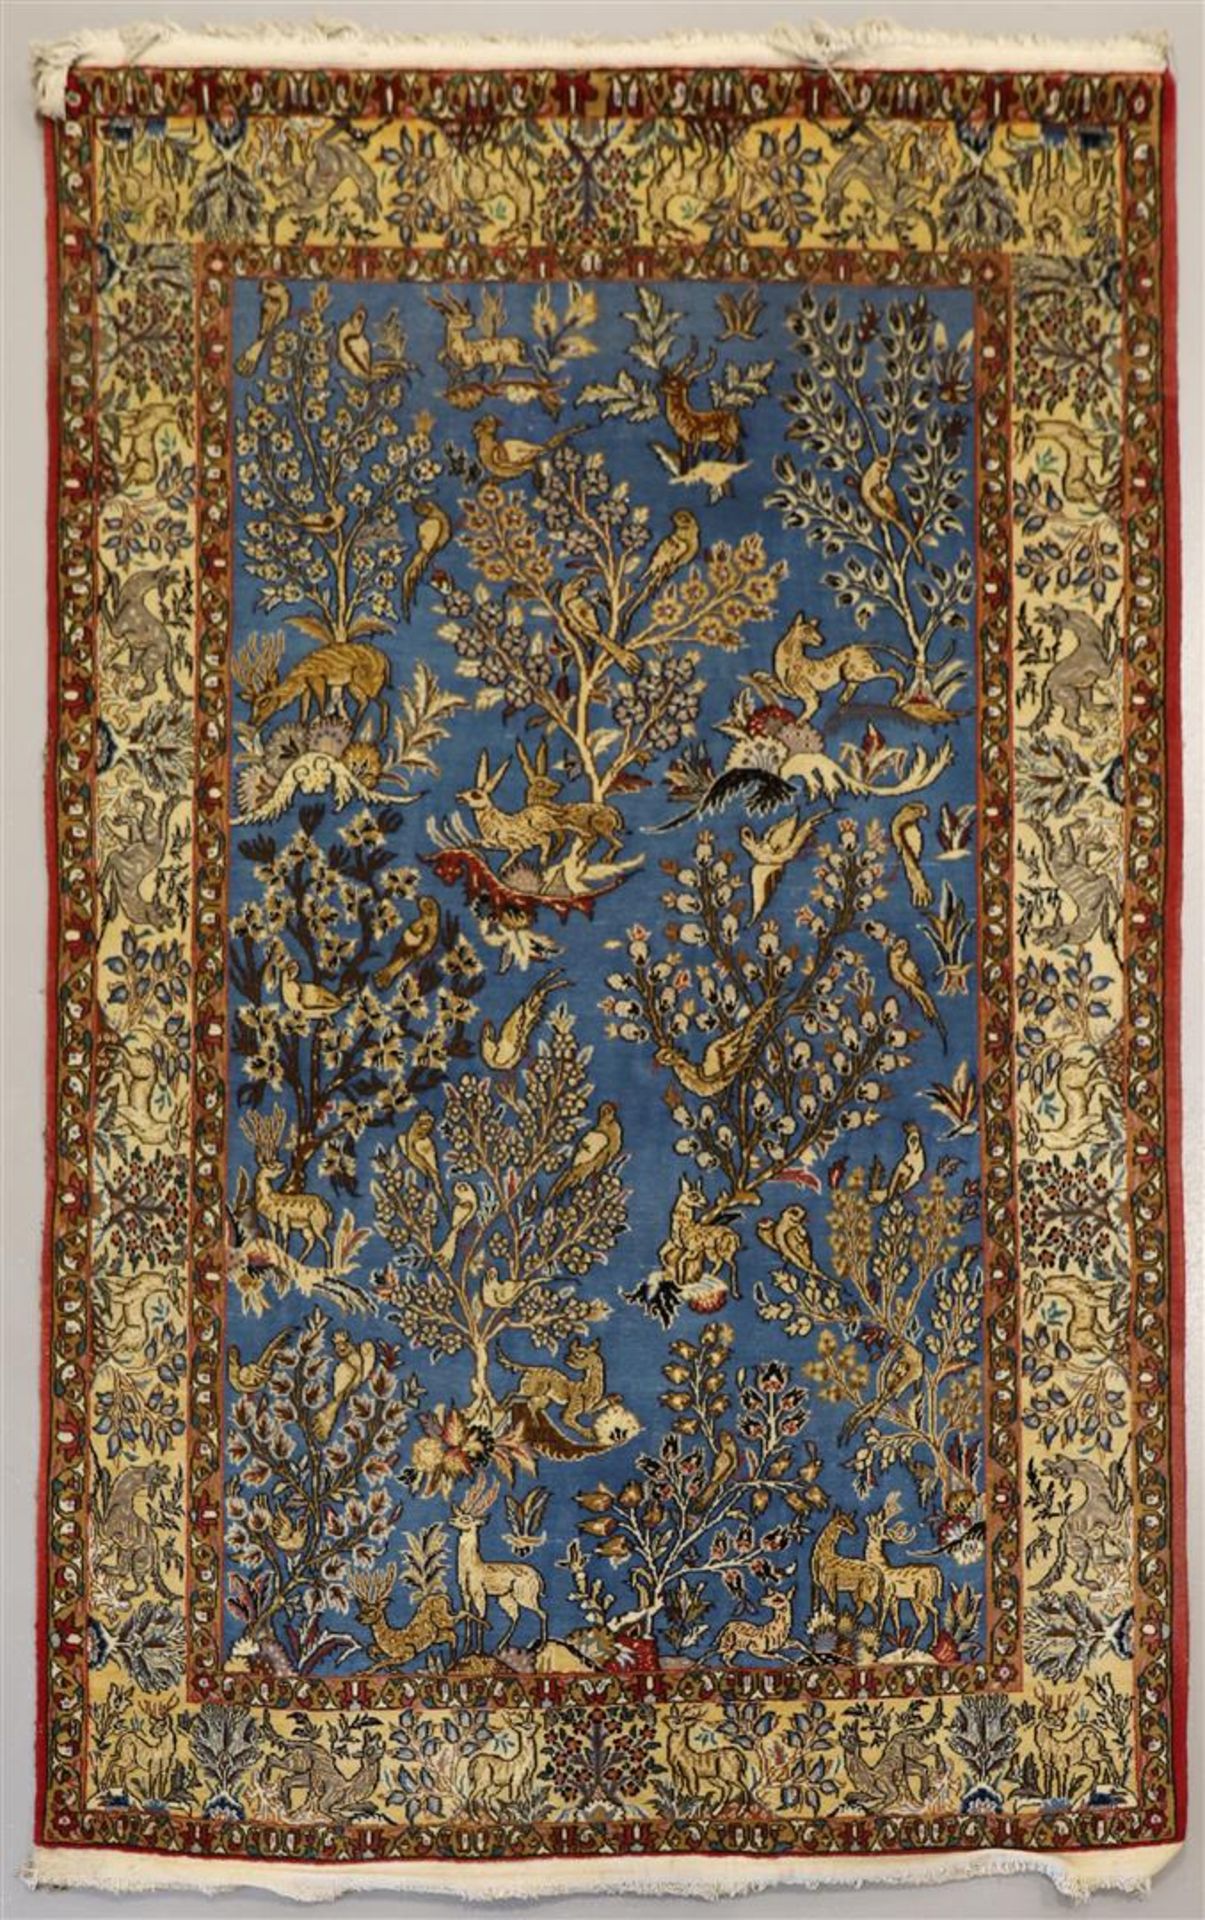 A Persian silk carpet, Ilam Sherkat Farsh. Polychrome decor of deer, hares and birds in floral